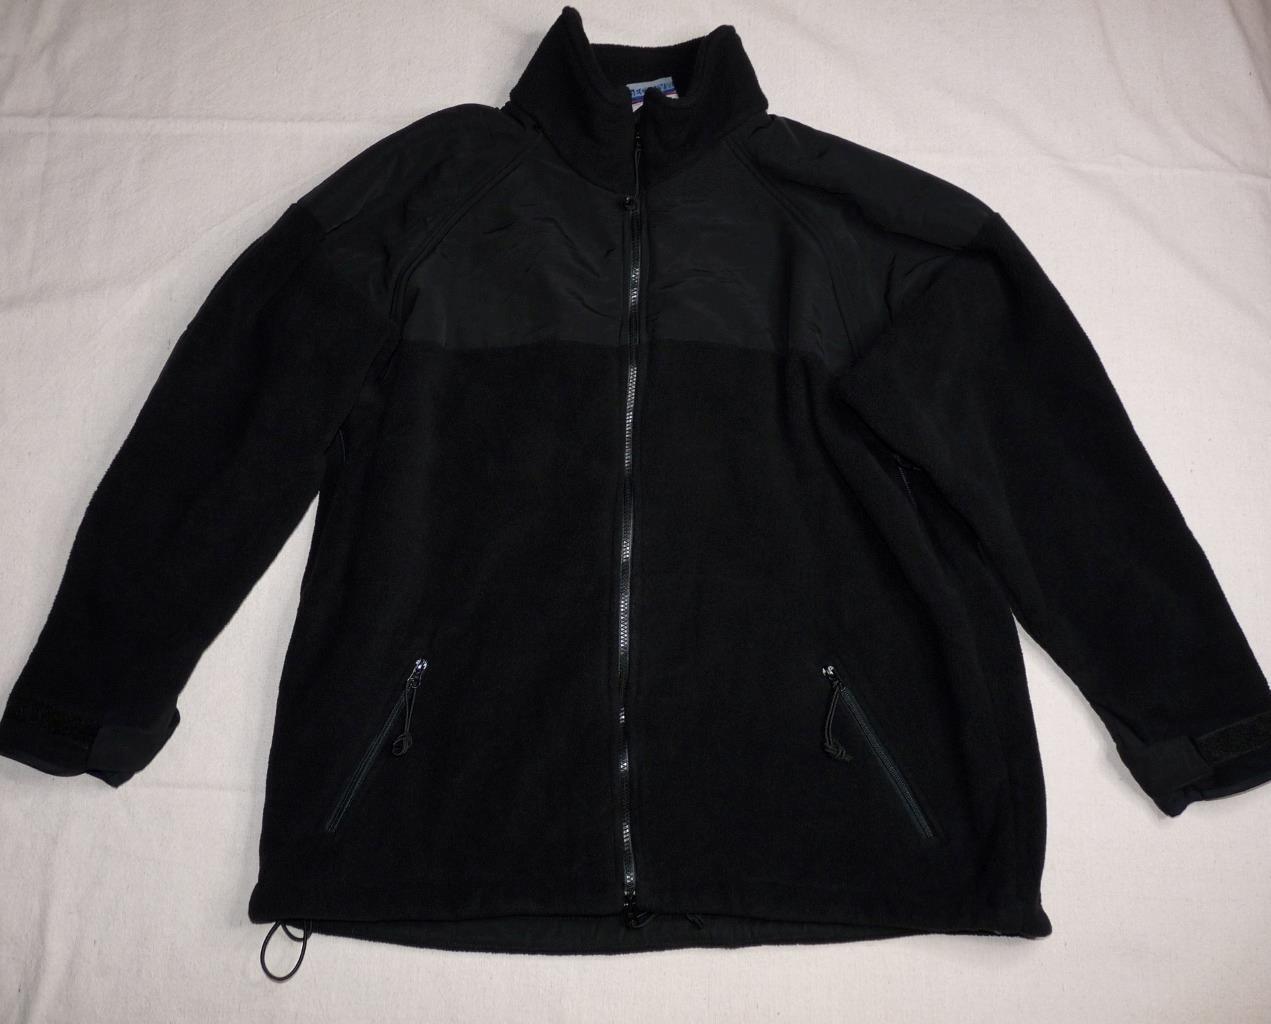 DSCP Peckham US Military X-LARGE Black Polartec 300 Fleece Cold Weather Jacket